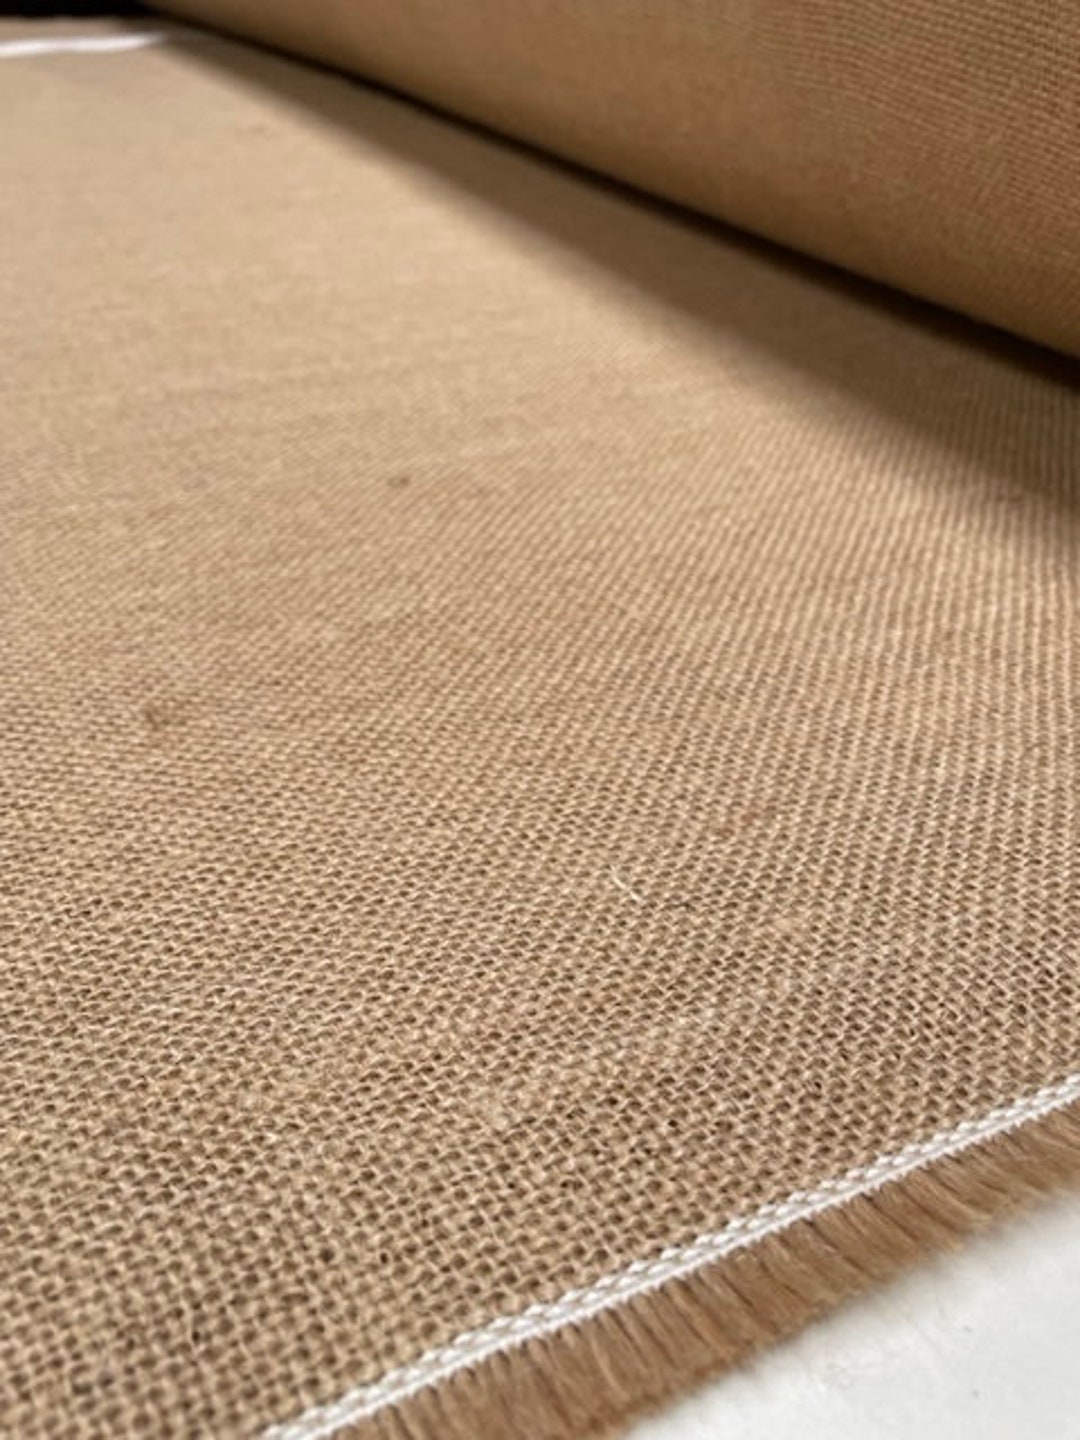 1m wide Jute Hessian Burlap Fabric Wedding Craft Upholstery Sacking Top  Quality